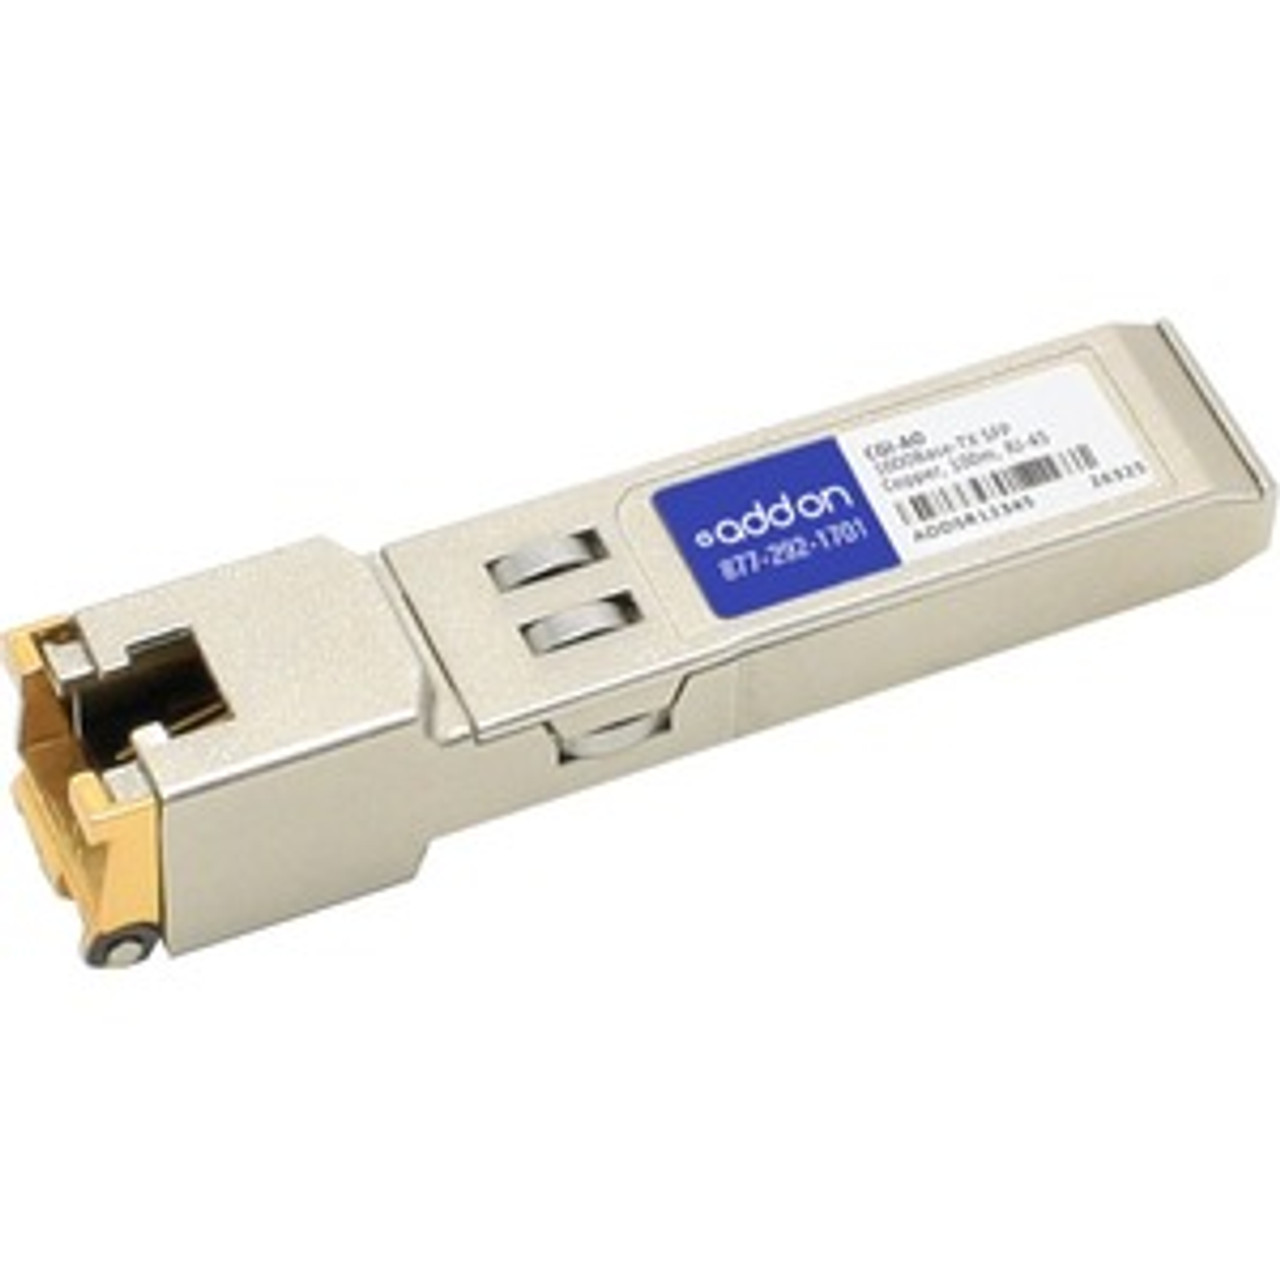 CGI-AO AddOn 1Gbps 1000Base-TX Copper 100m RJ-45 Connector SFP Transceiver Module for Anue Compatible